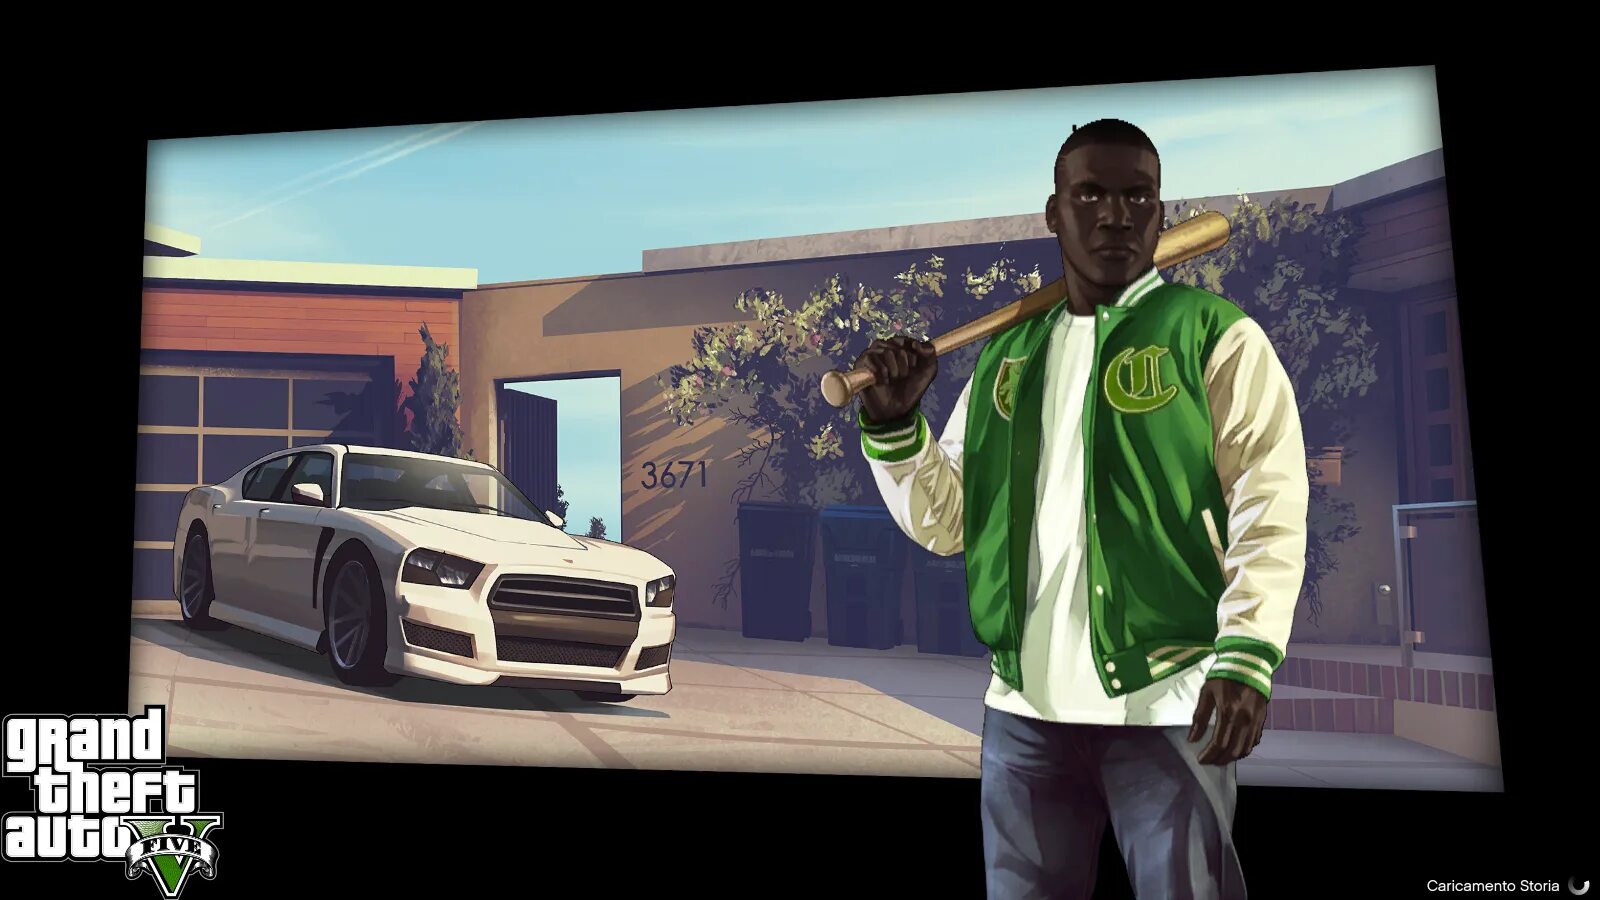 Grand Theft auto 5 загрузочные экраны. Экран загрузки ГТА 5. Загрузочный экран ГТА 5. Загрузка ГТА 5. Гта 5 челлендж